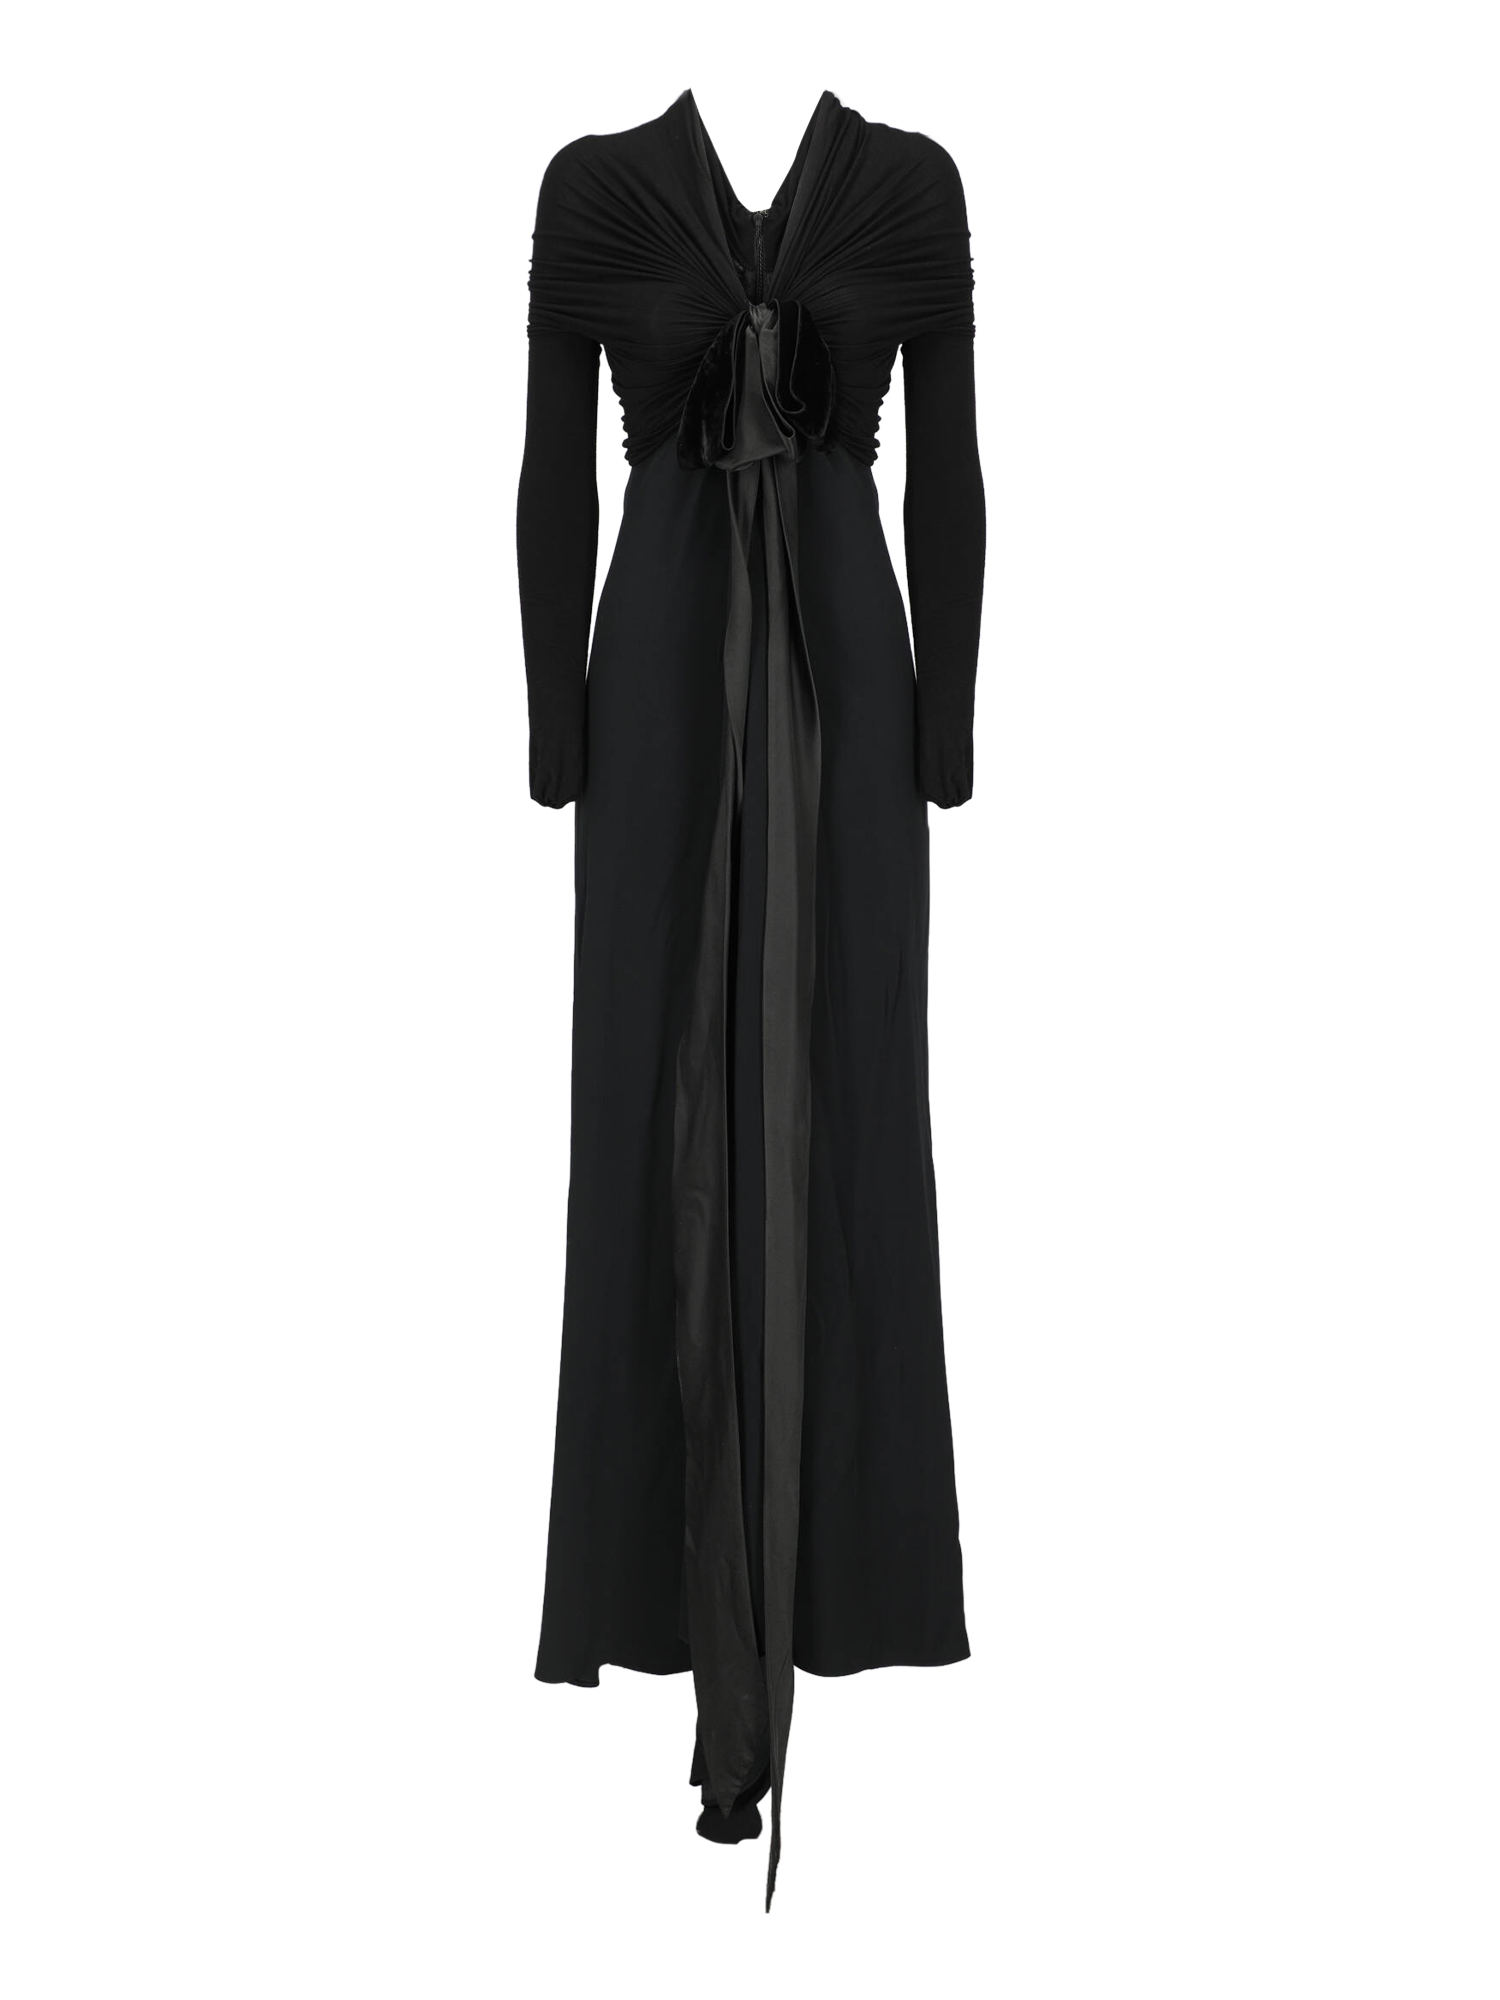 Robes Pour Femme - Gianfranco Ferre - En Fabric Black - Taille:  -